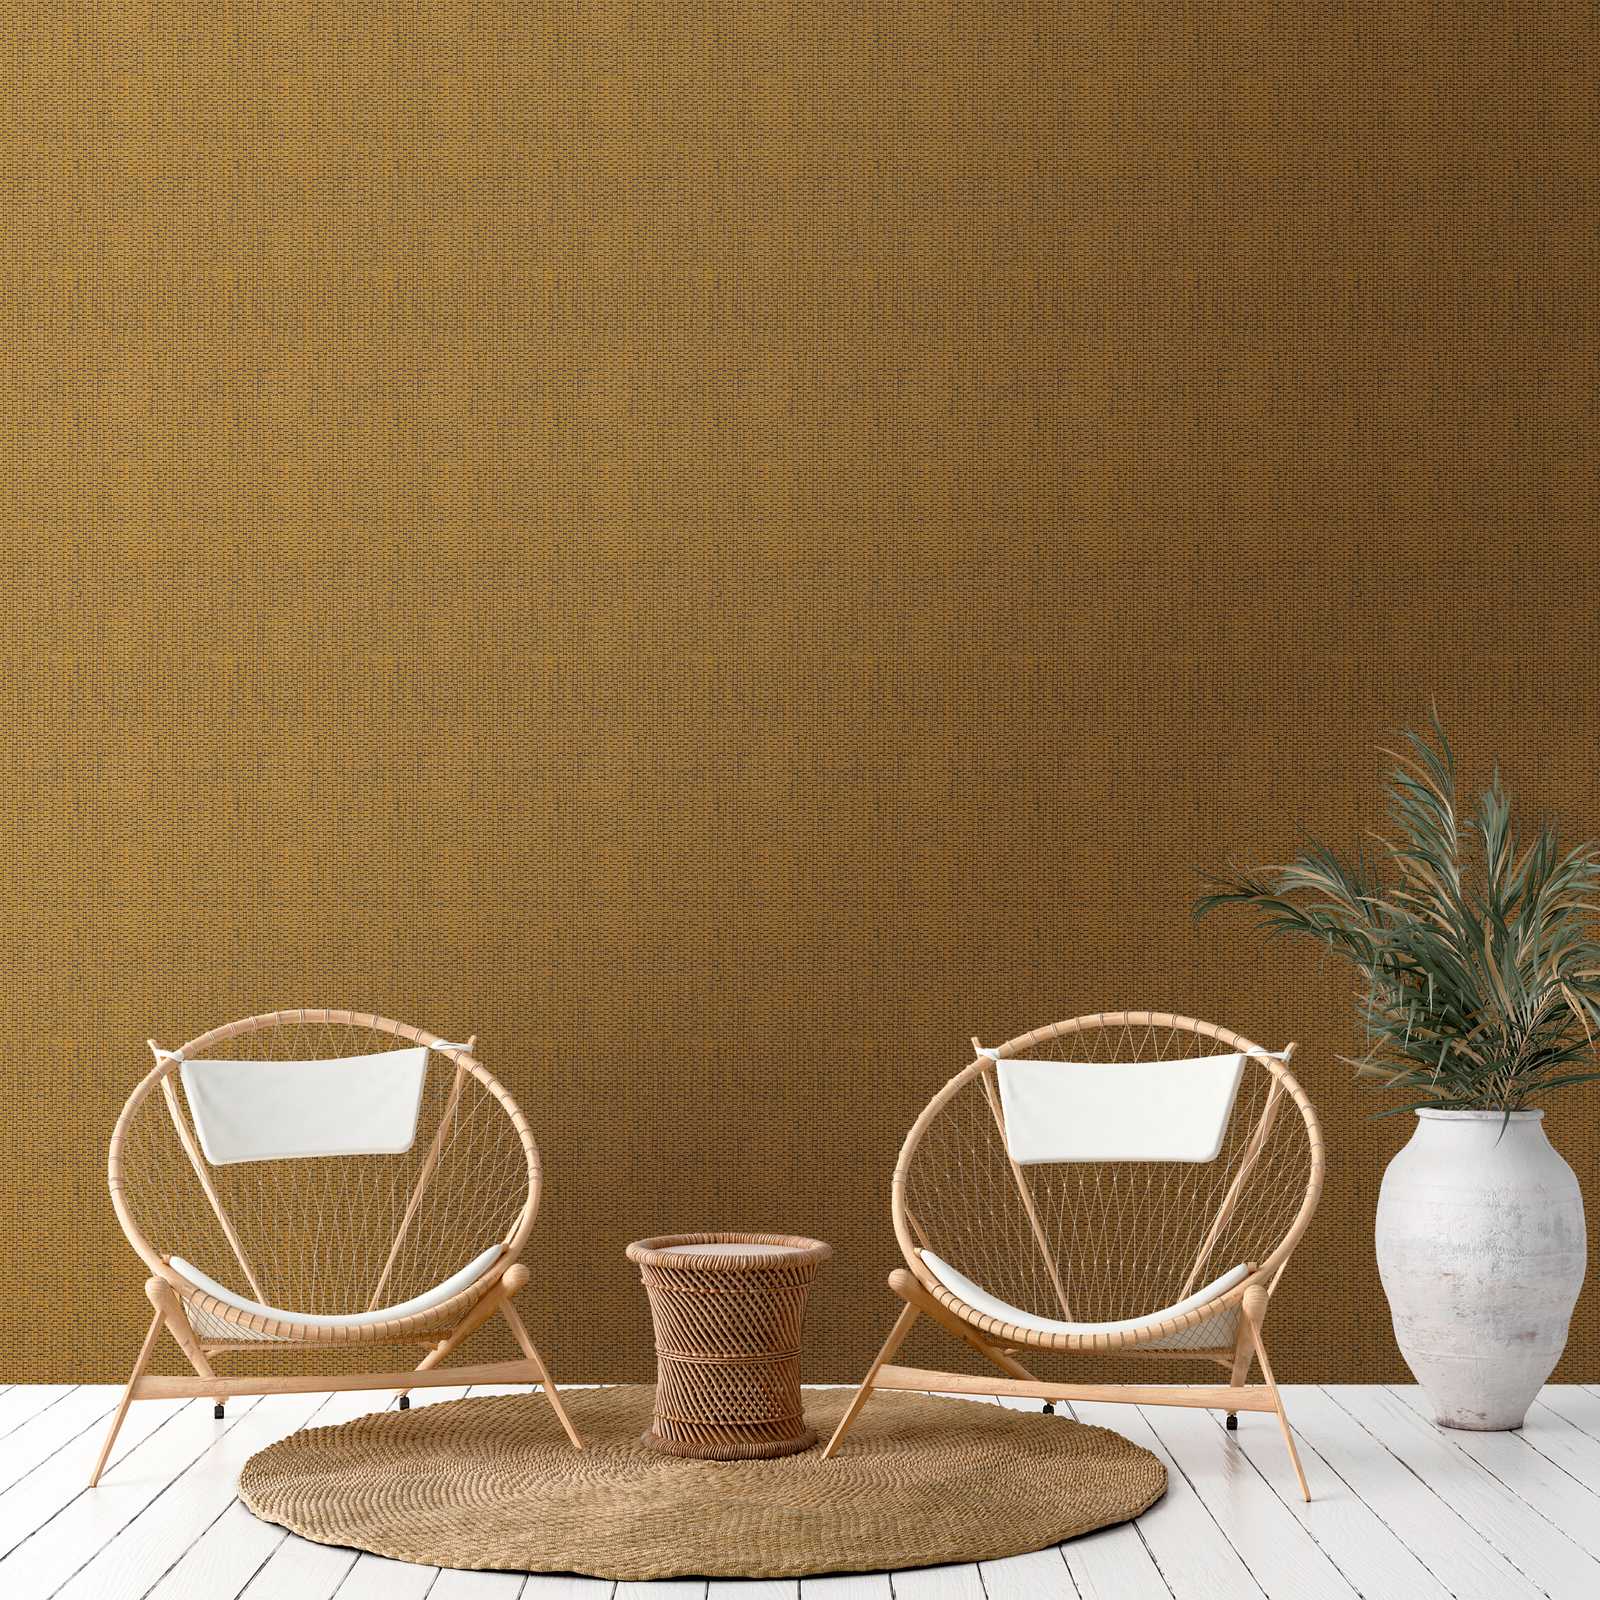             Wallpaper with raffia mats design - brown, yellow
        